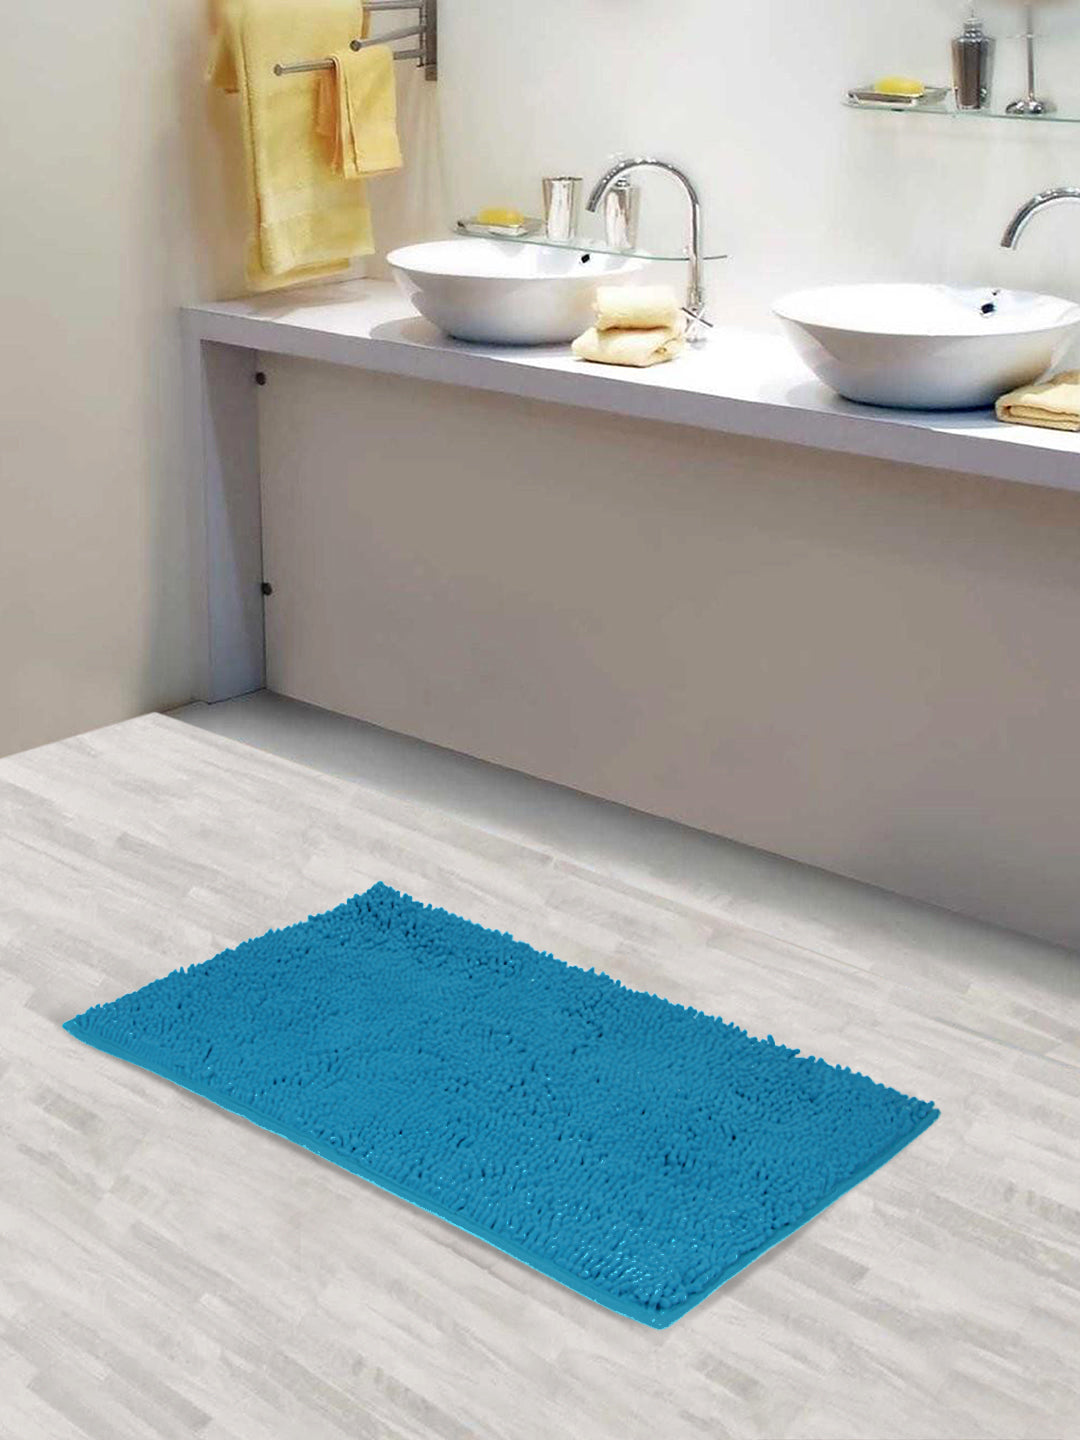 Lushomes Bathroom Mat, 2200 GSM Floor, bath mat Mat with High Pile Microfiber, anti skid mat for bathroom Floor, bath mat Non Slip Anti Slip, Premium Quality (20 x 30 inches, Single Pc, Blue)